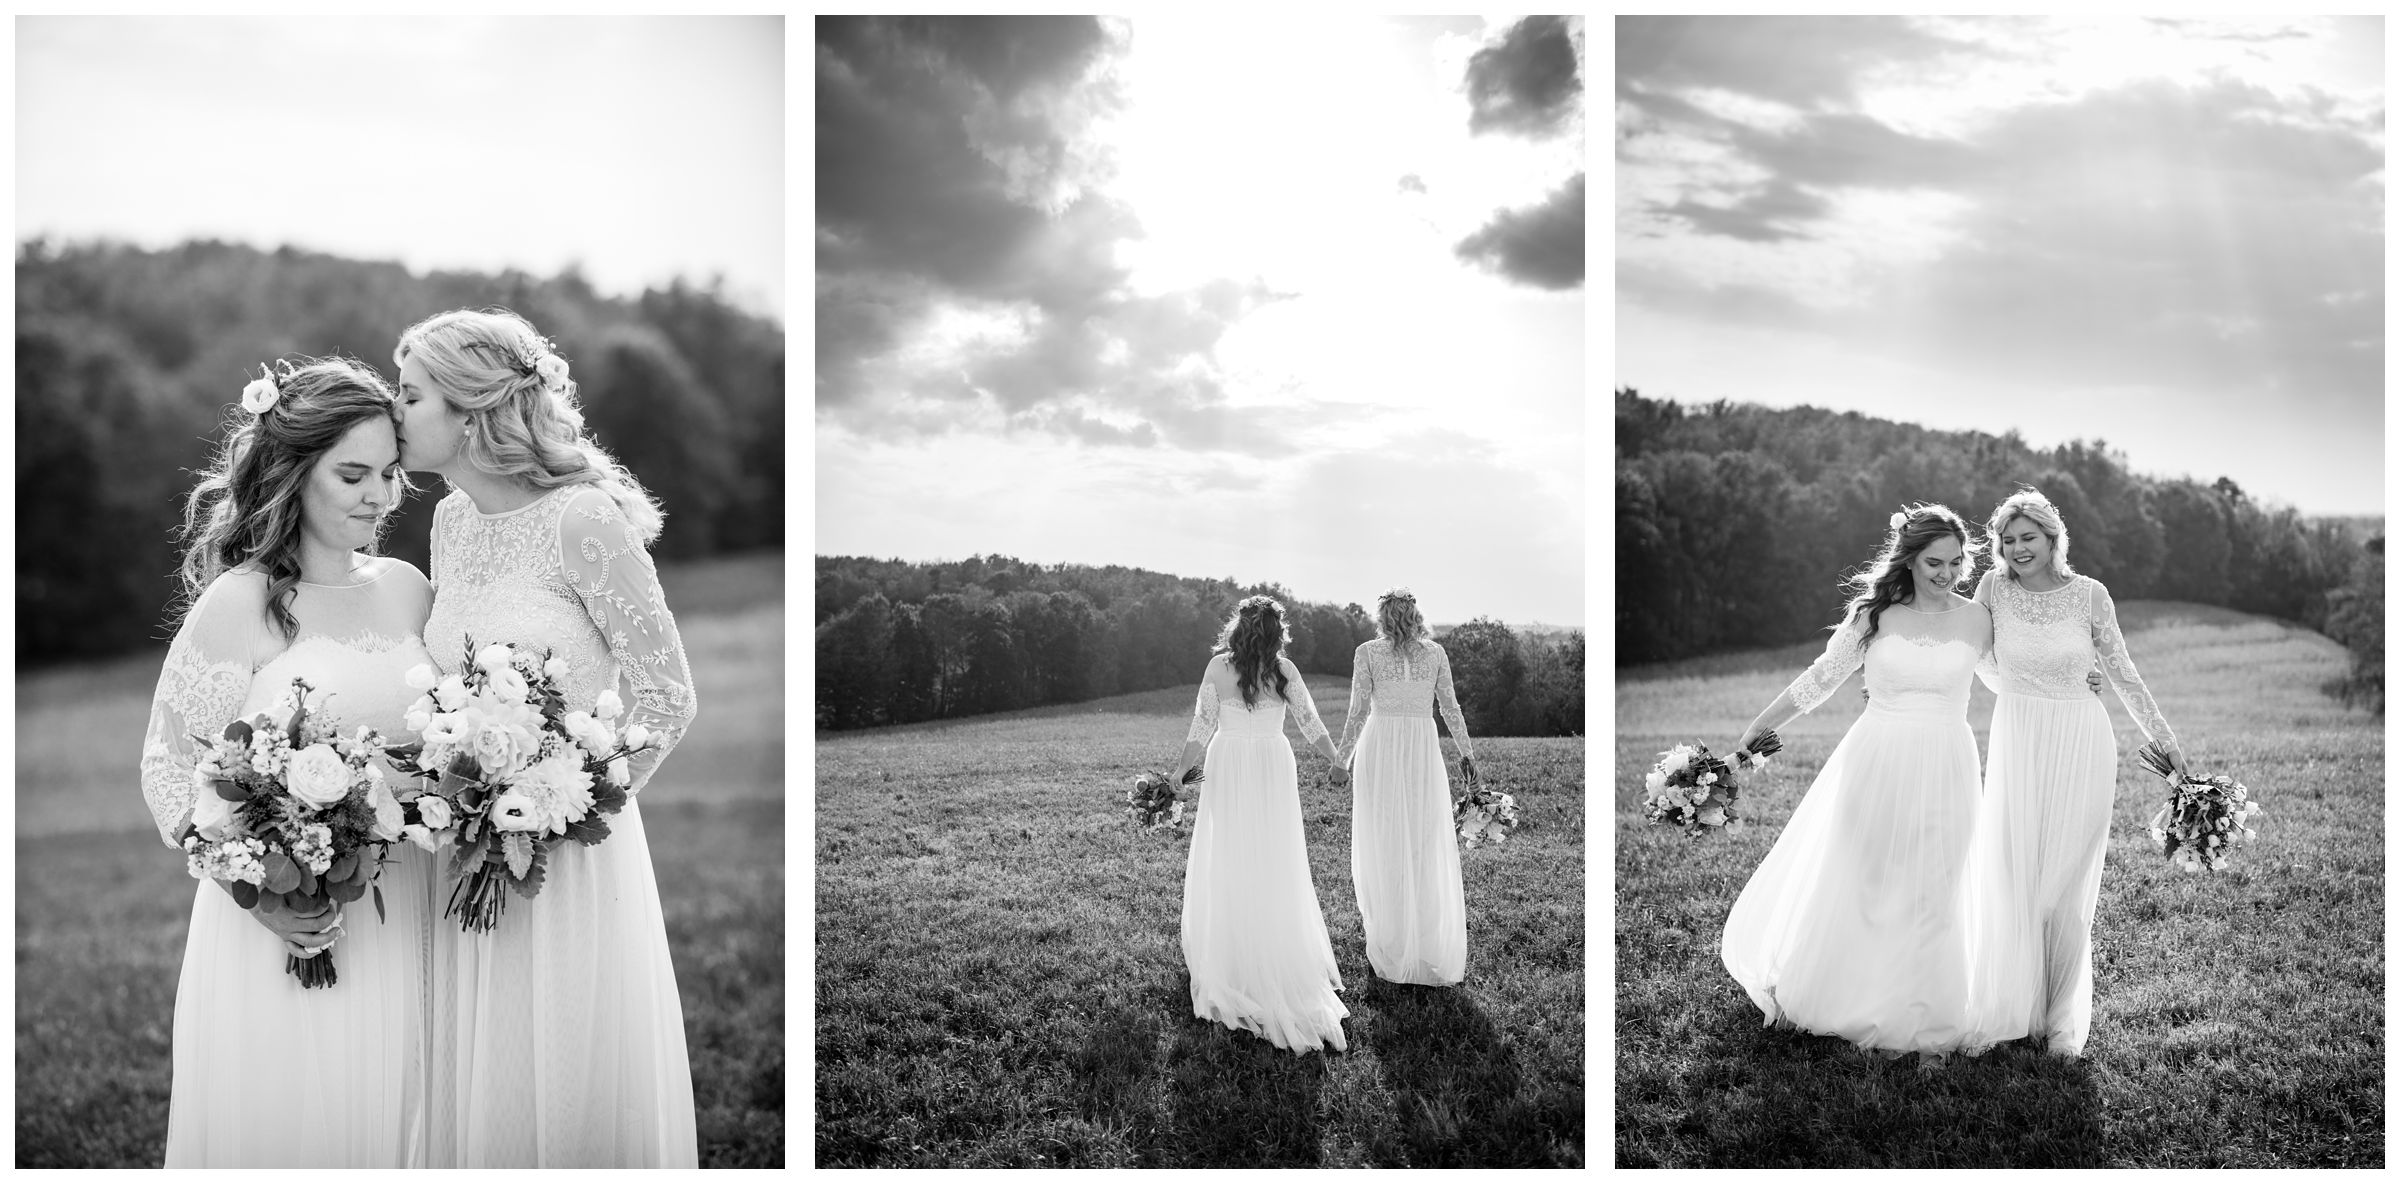 LGBTQ same-sex wedding portraits with two brides on hilltop after farm wedding ceremony.